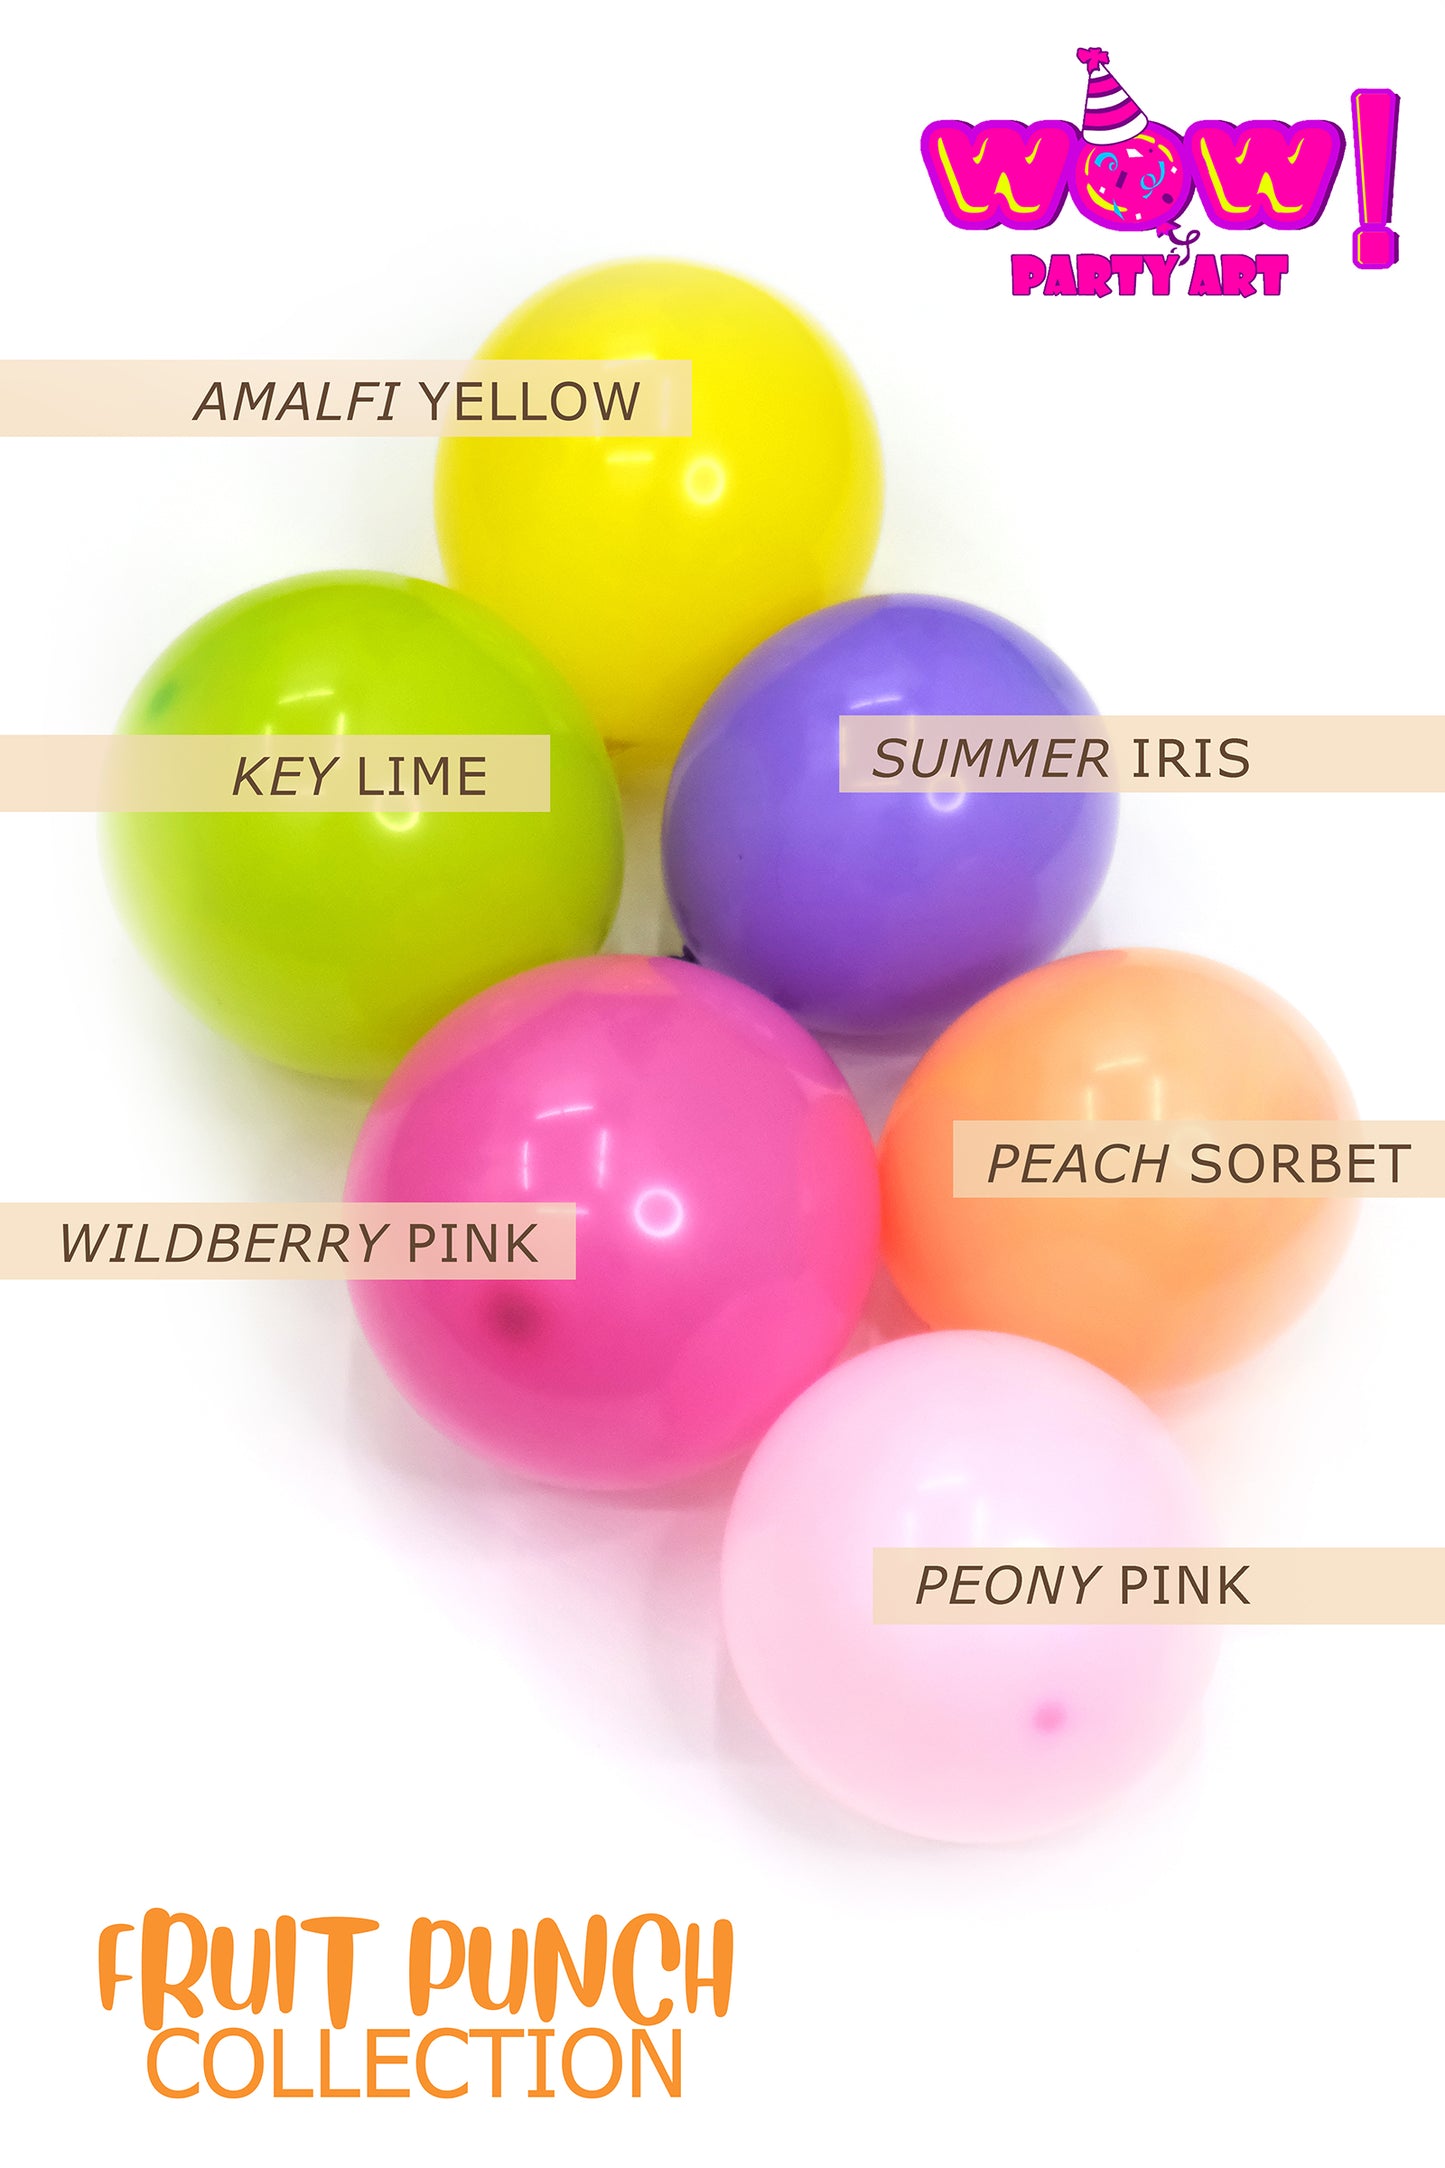 Tutti-Frutti DIY Balloon Arch Garland Kit | Hot Pink Peach Yellow Purple Lime| Tropical Luau Summer Baby Shower Birthday Party Balloon Decor